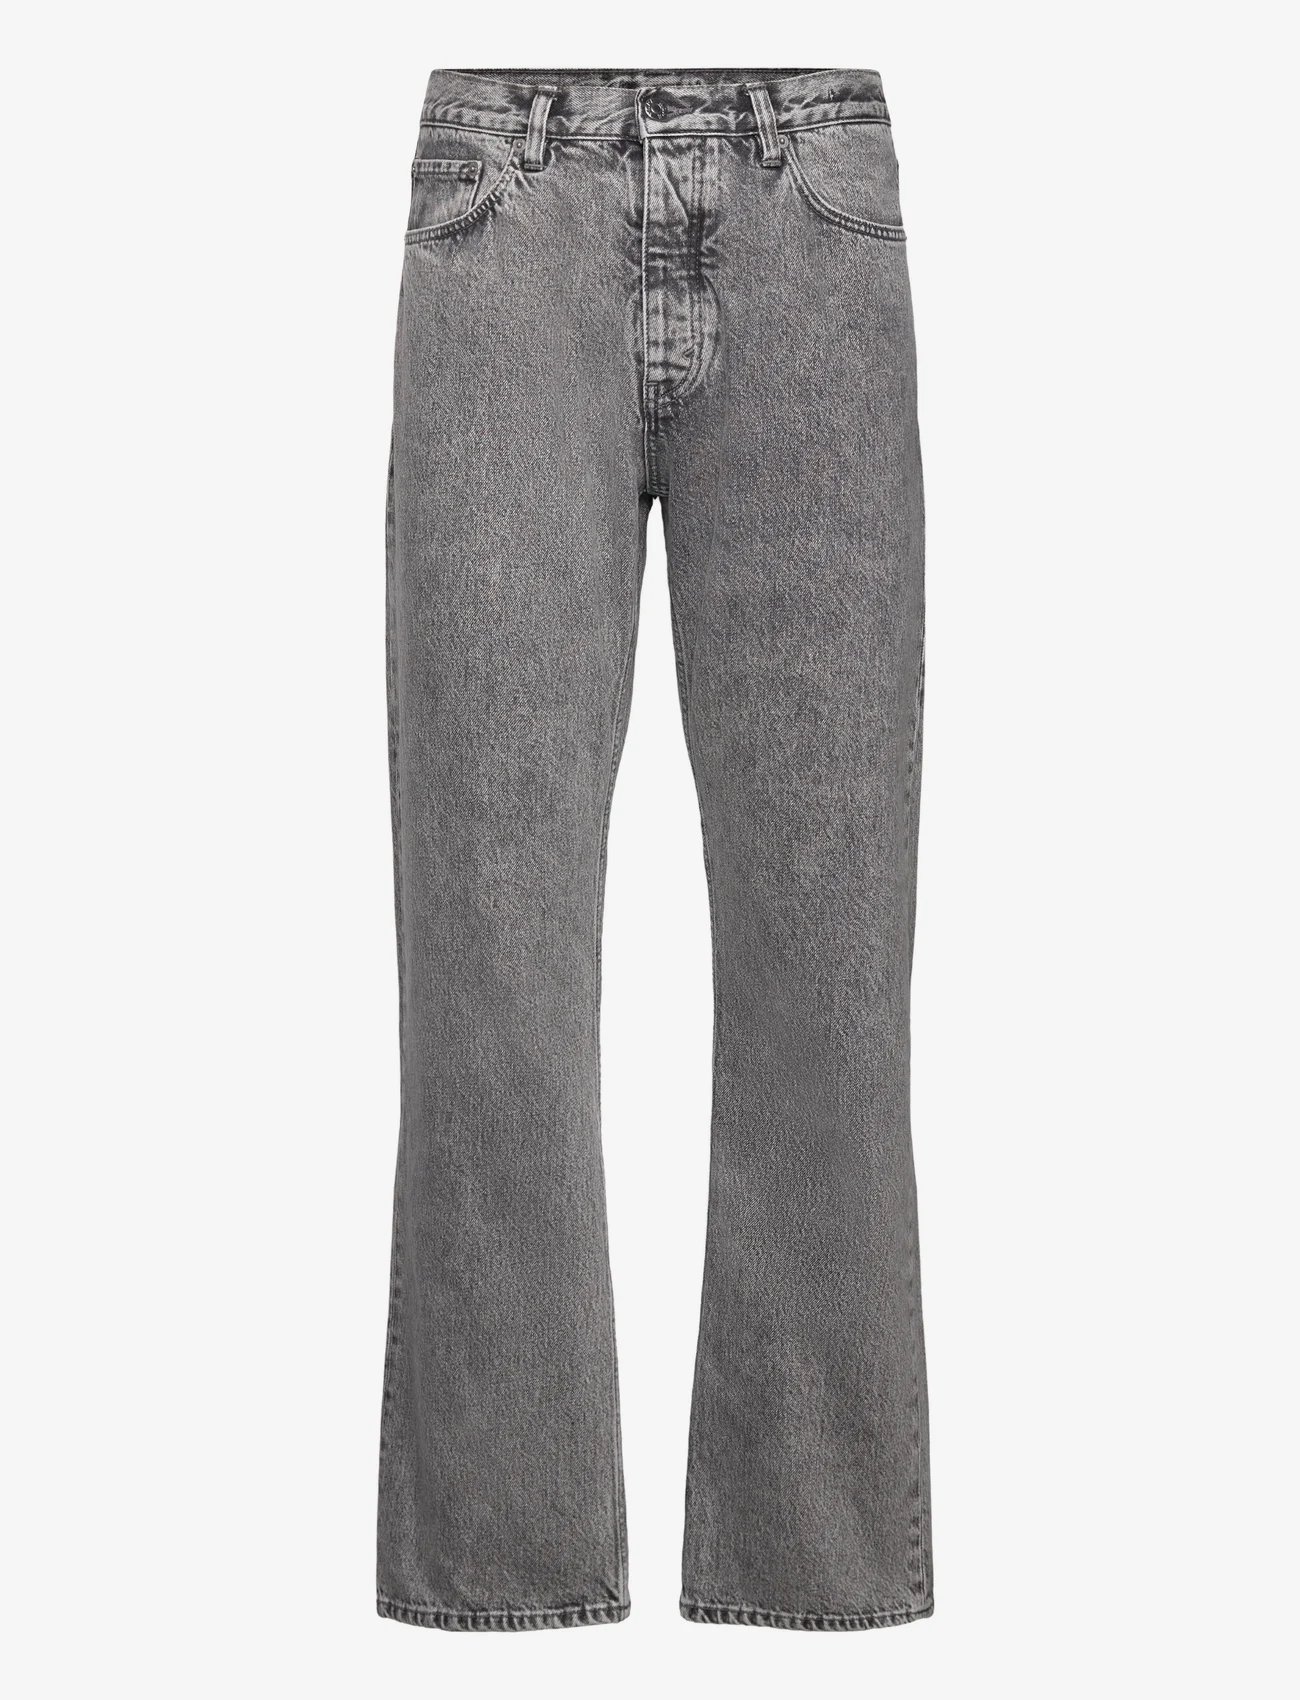 Hope - Rush Jeans Mid Grey Stone 2 - džinsi - mid grey stone 2 - 0